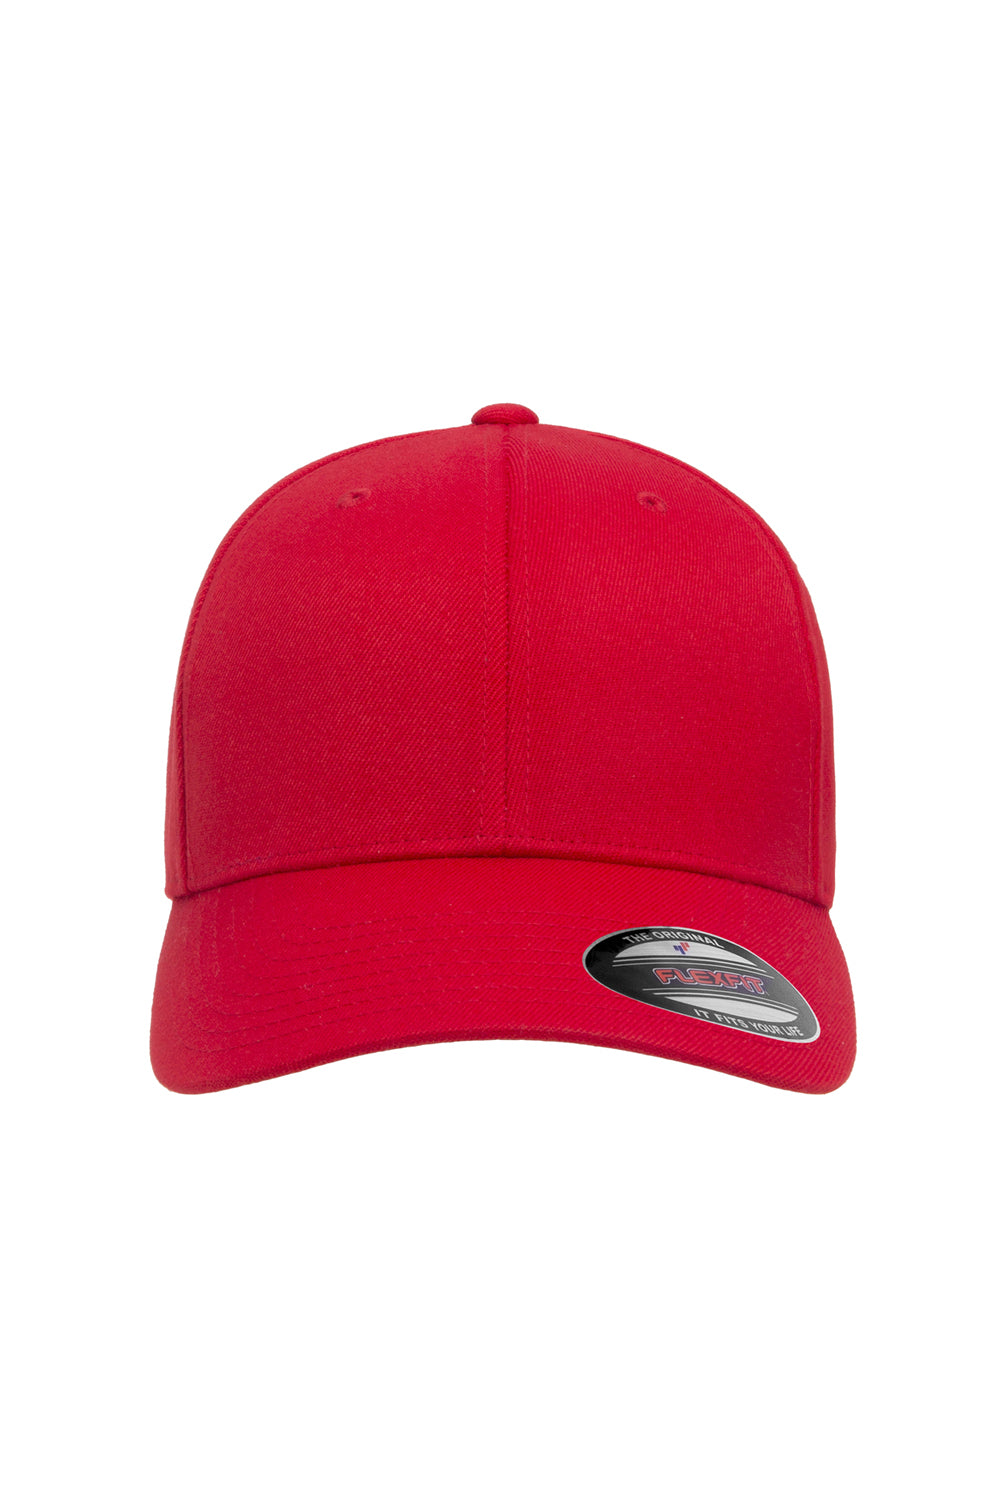 Flexfit 6477 Mens Stretch Fit Hat Red Front